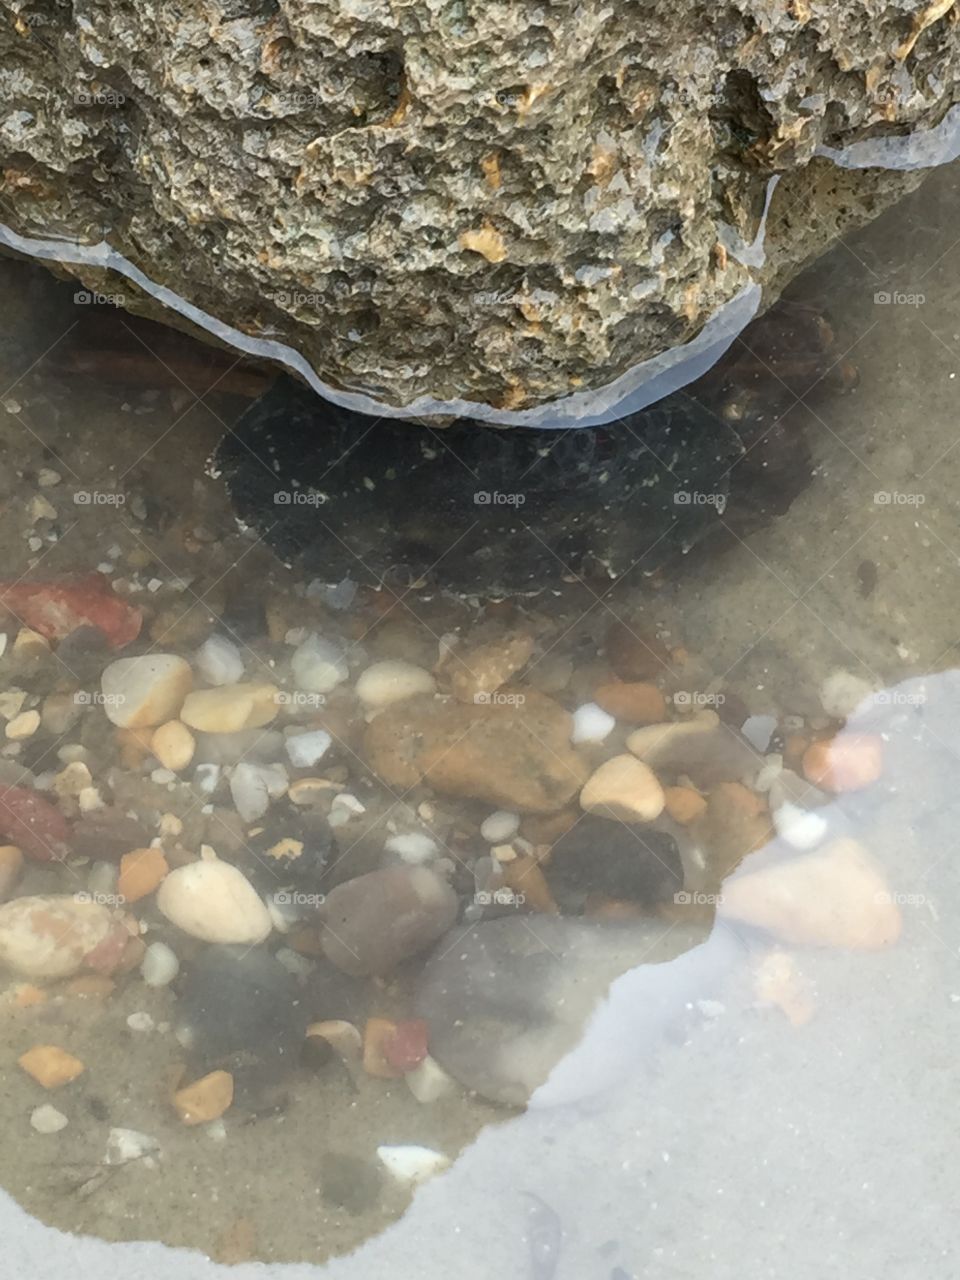 Crab under rock on bembridge beach